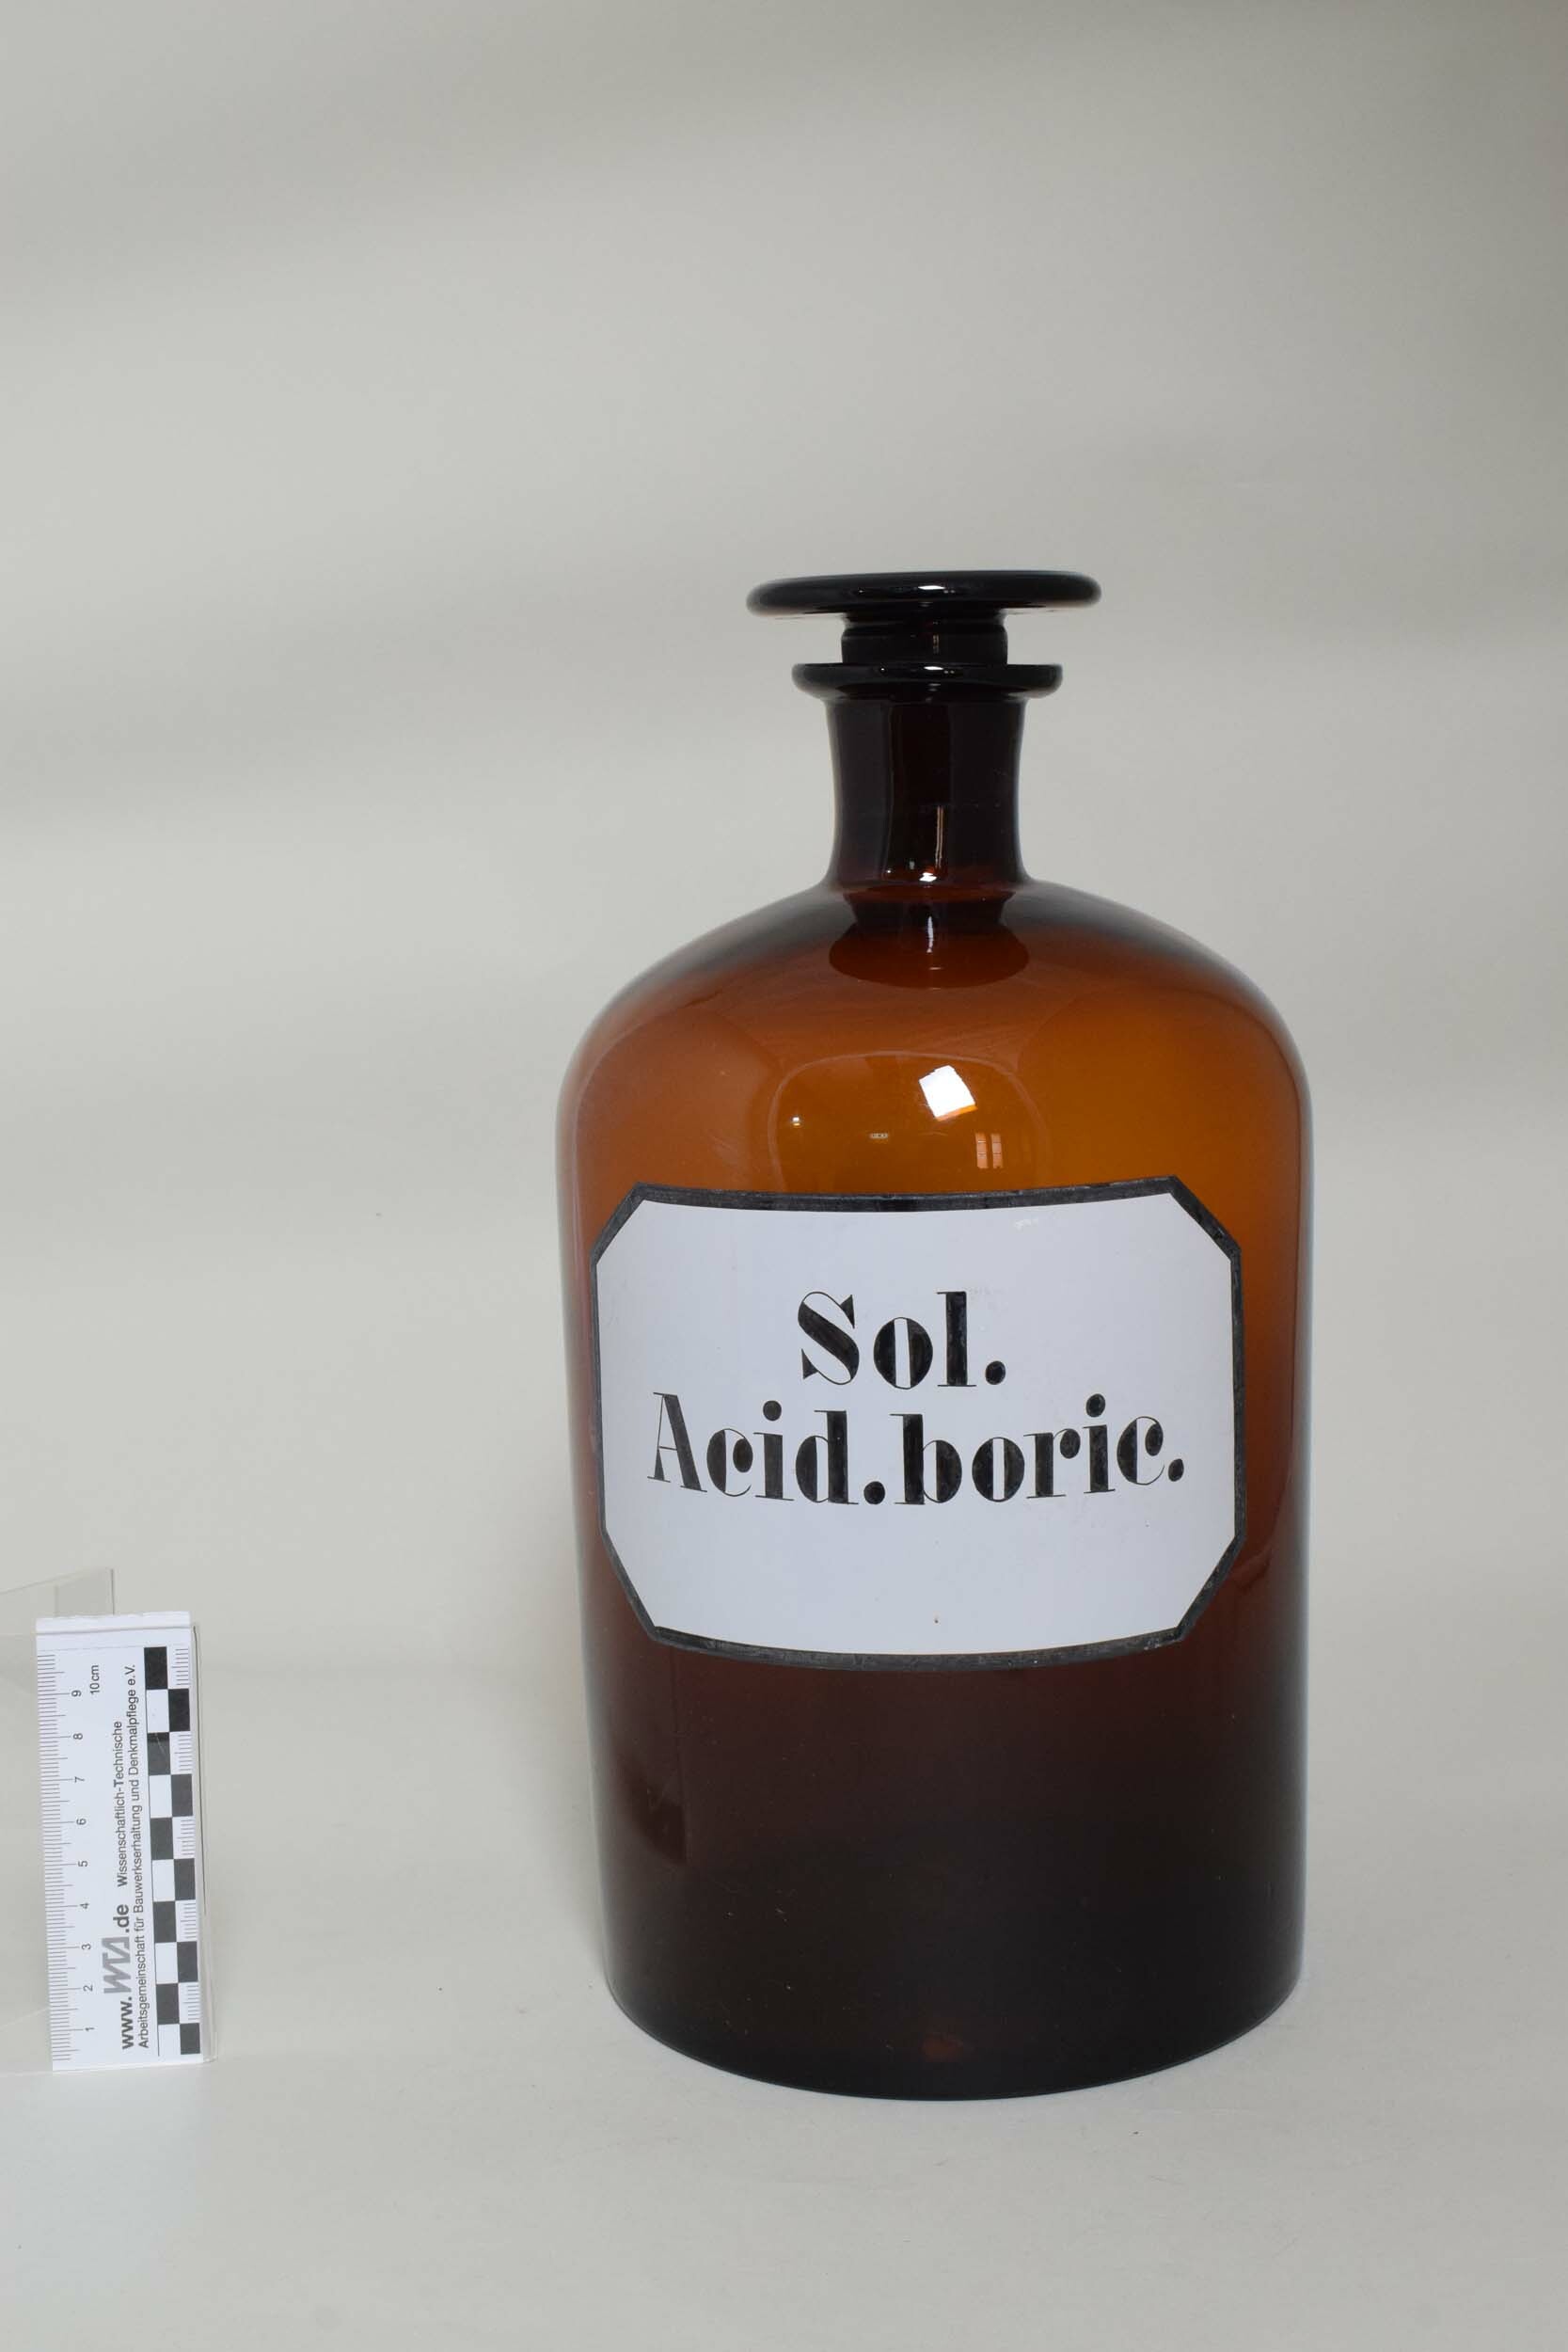 Apothekenflasche "Sol. Acid.boric." (Heimatmuseum Dohna CC BY-NC-SA)